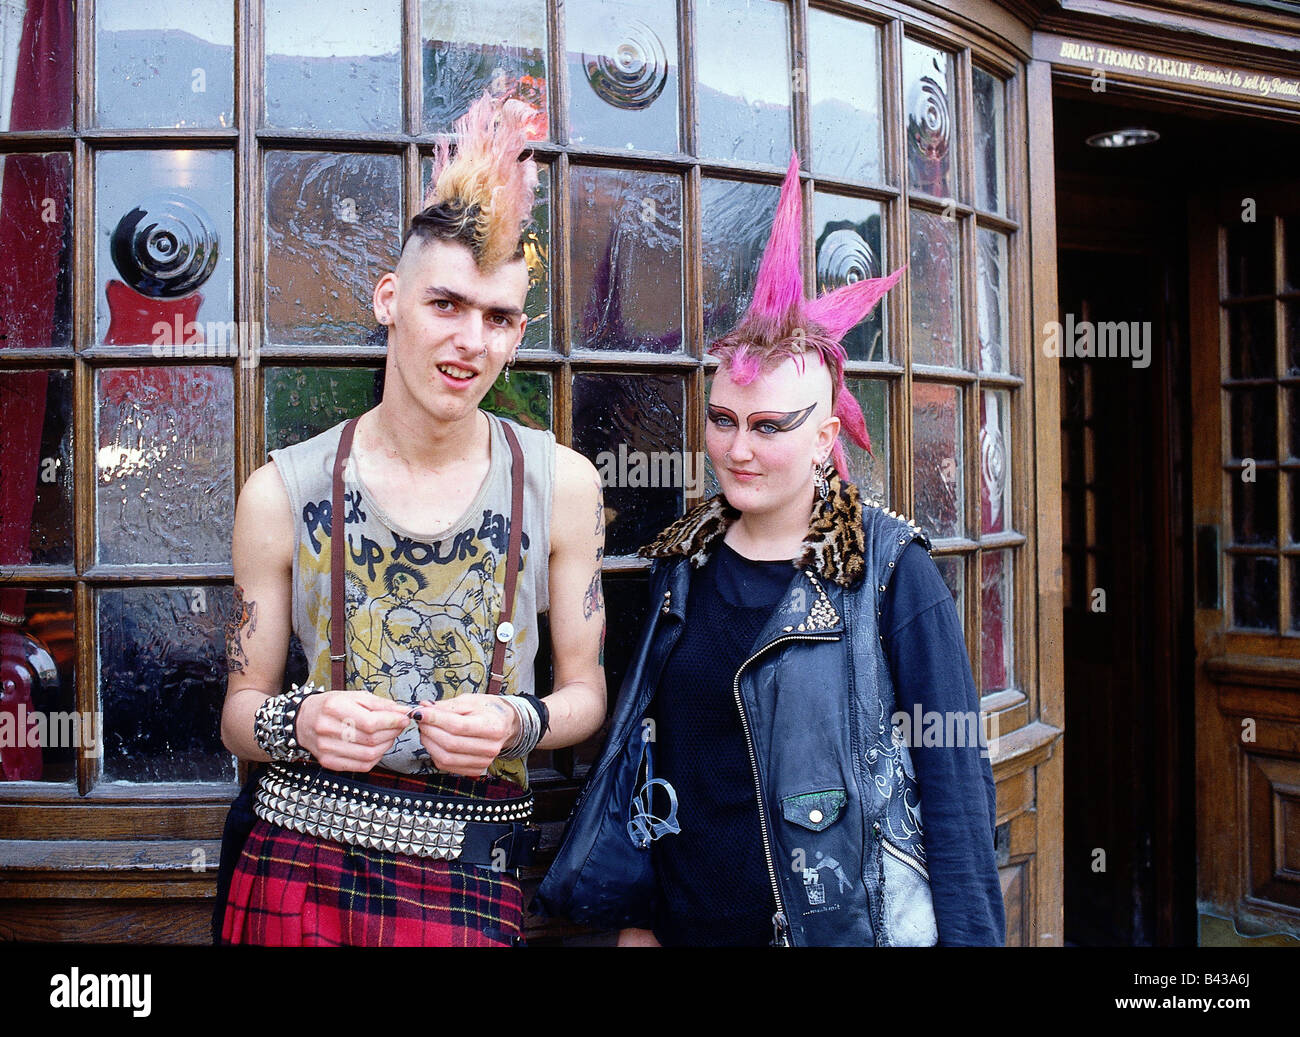 People Two Punks Half Length London Kensington Market 1980s